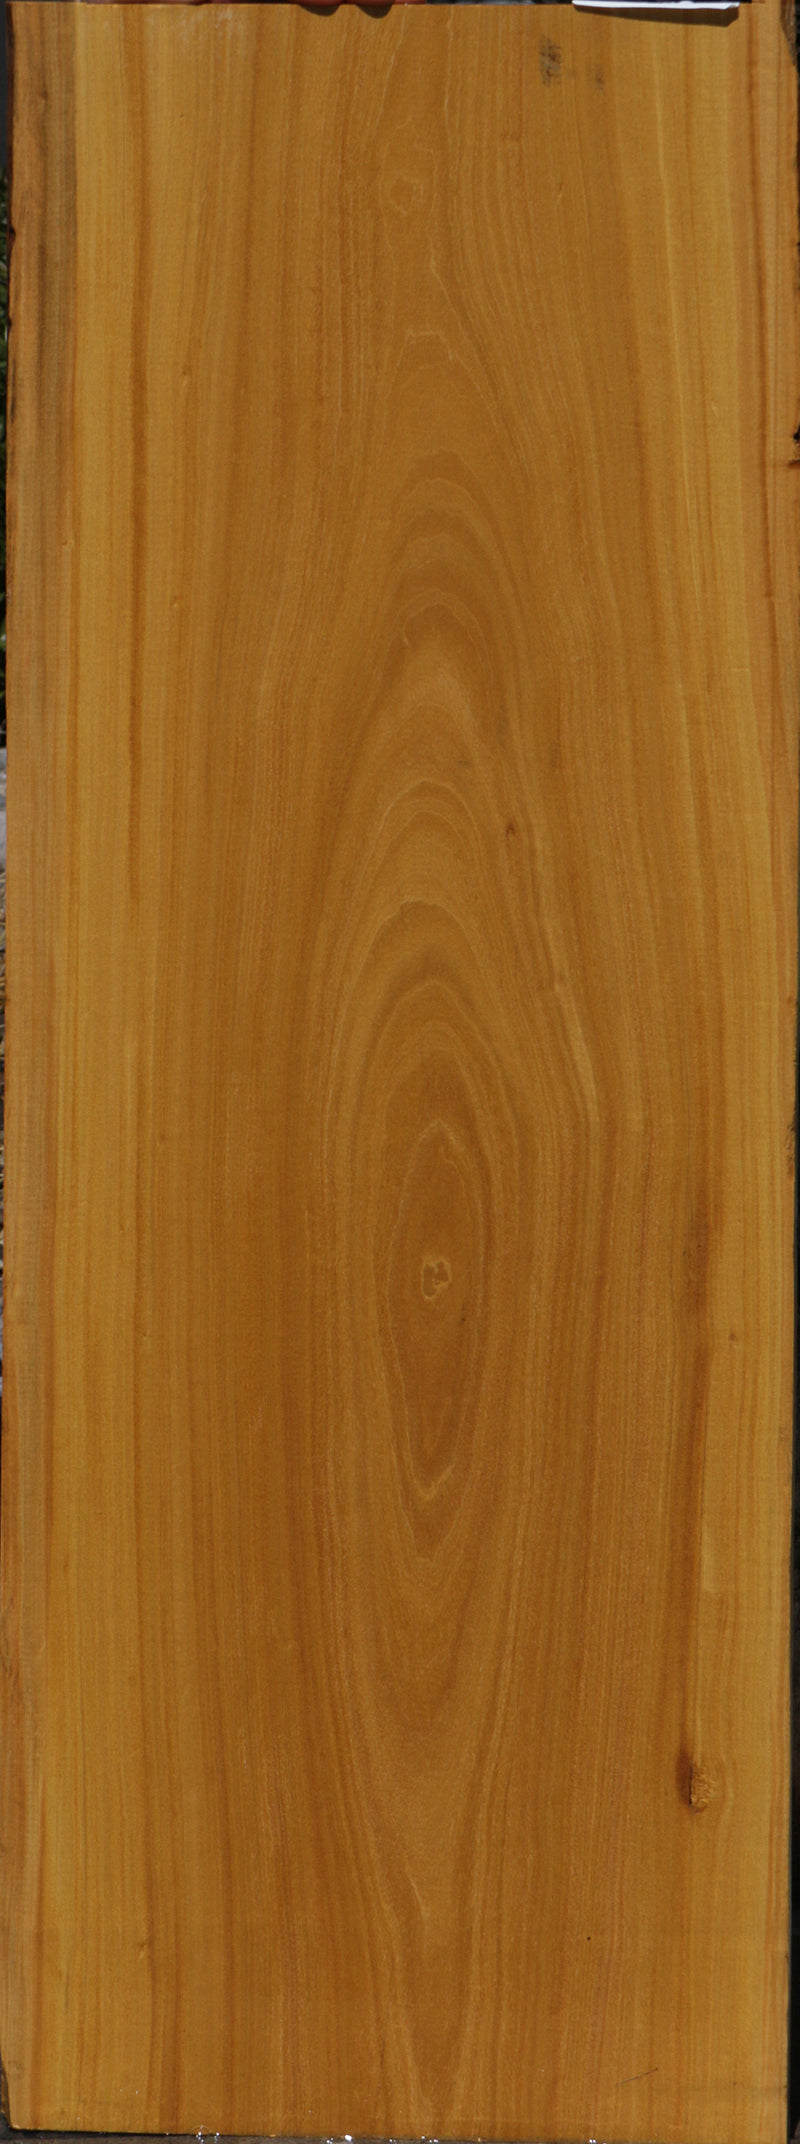 Ceylon Satinwood Lumber